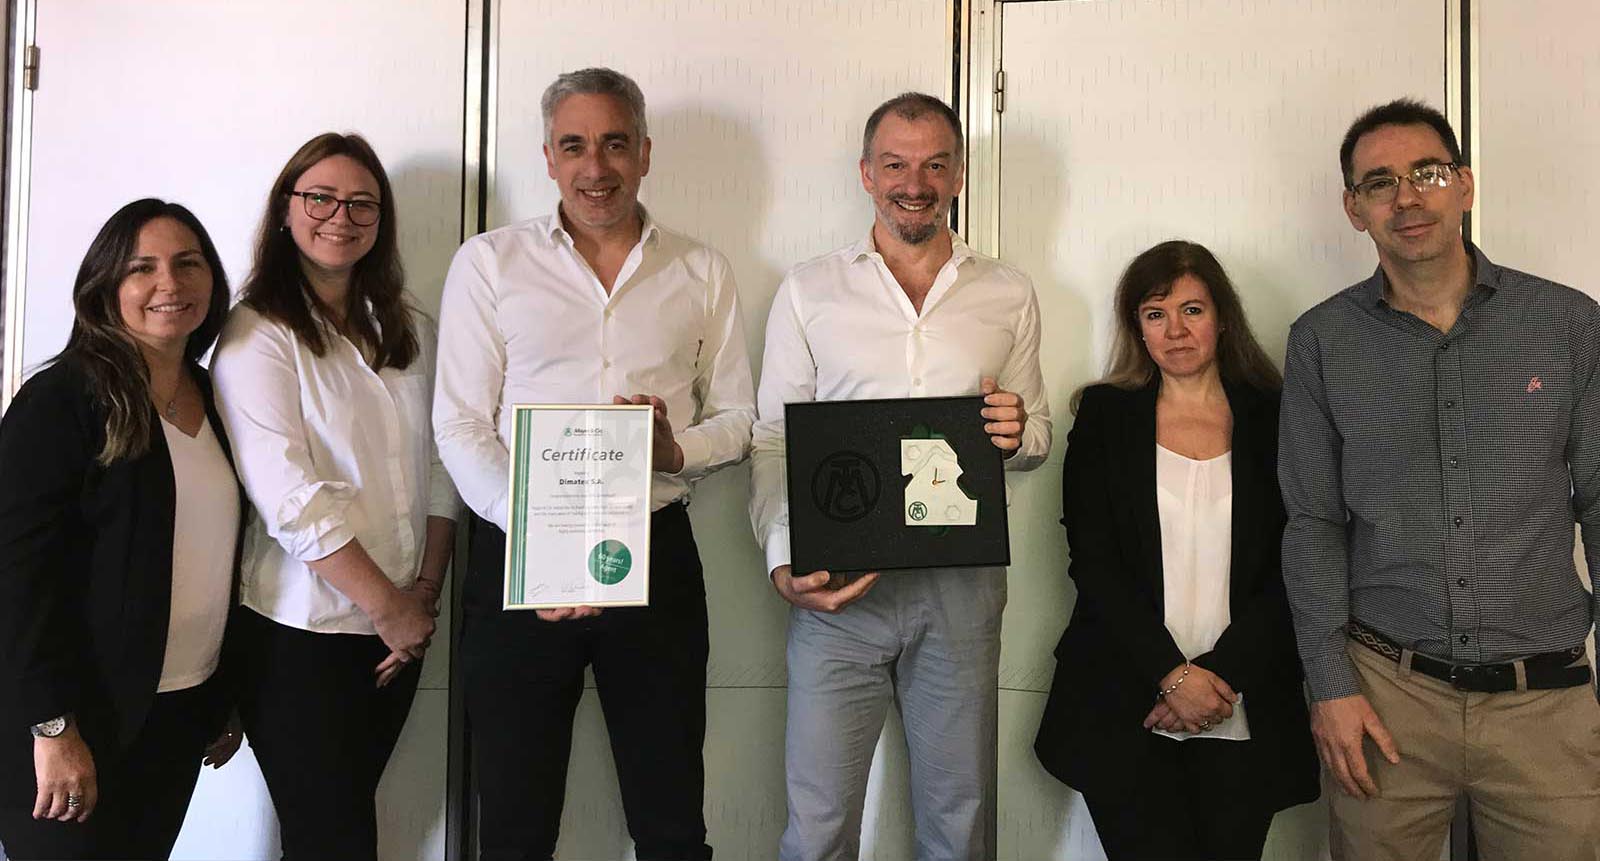 In 2020, Mayer & Cie. and Dimatex are able to celebrate the sixtieth anniversary of their successful collaboration. From left to right: Norma Derbes, Sarah Bäck, Diego Ferradás, Fernando Ferradás, Gabriela Menéndez Hässel, Fernando Atadia.